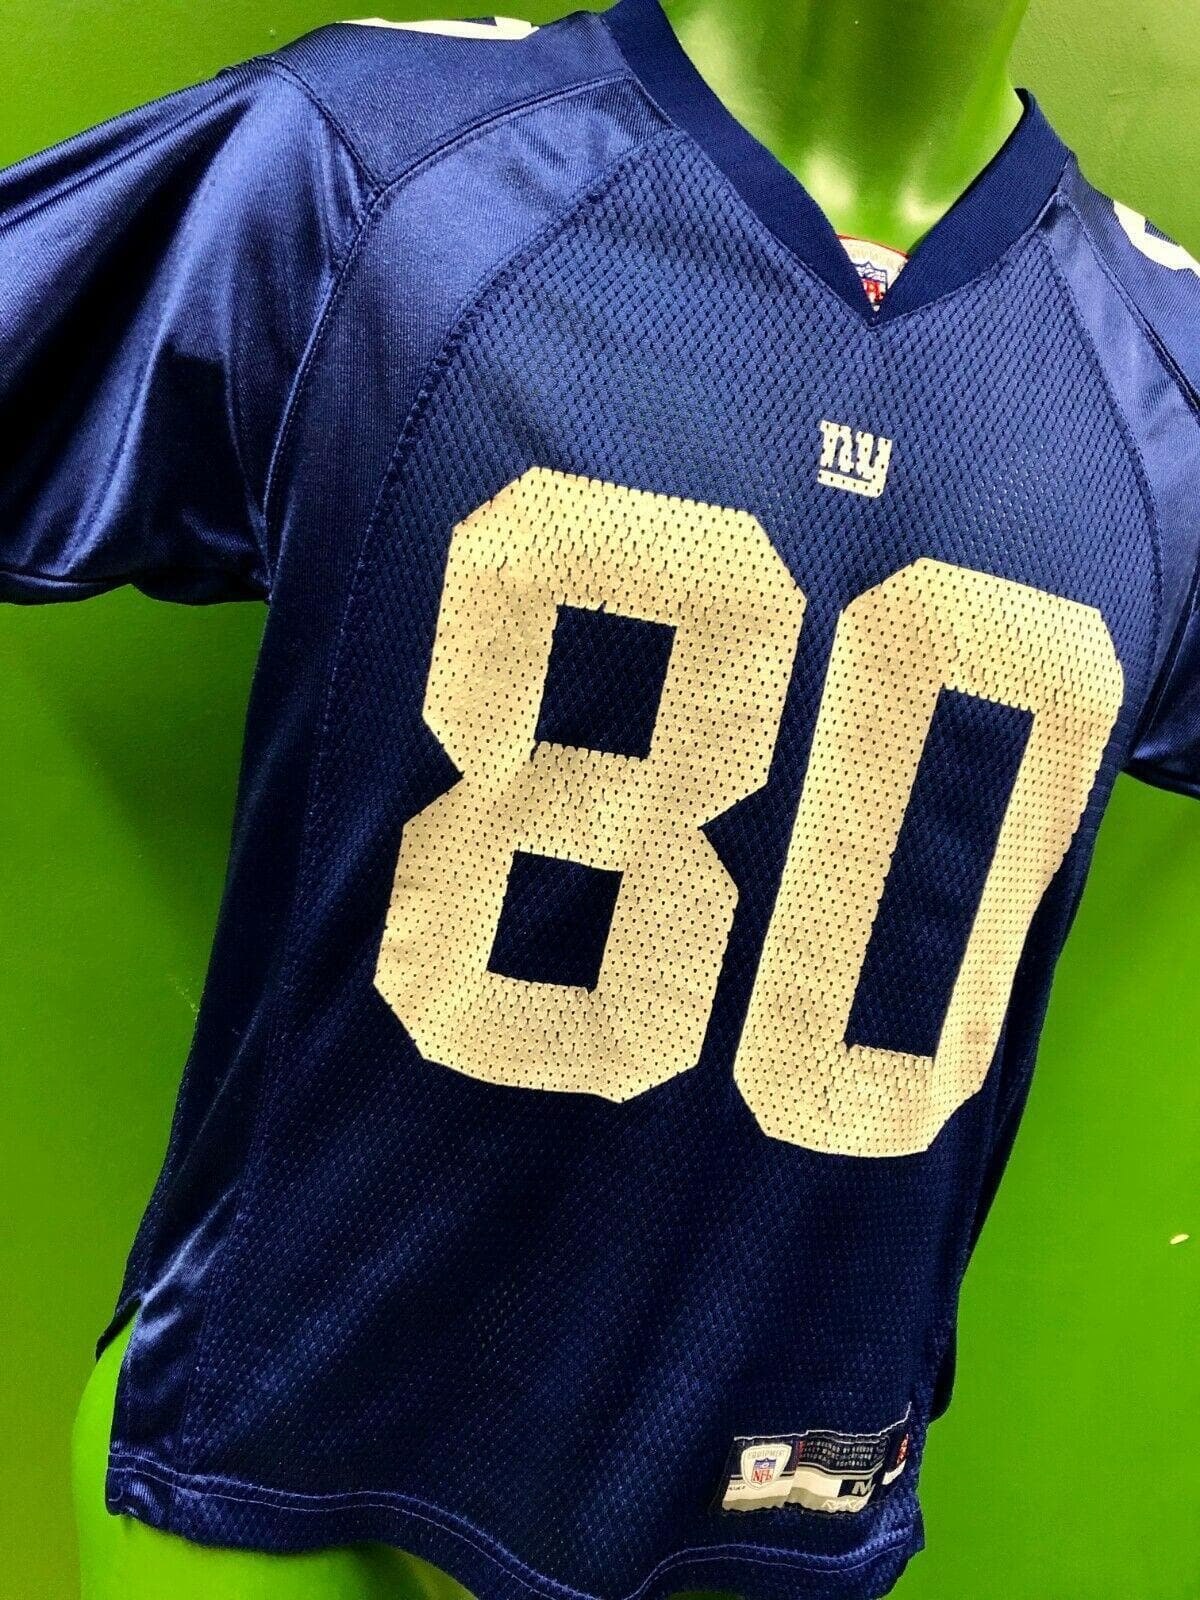 NFL New York Giants Jeremy Shockey #80 Reebok Jersey Youth Medium 10-12